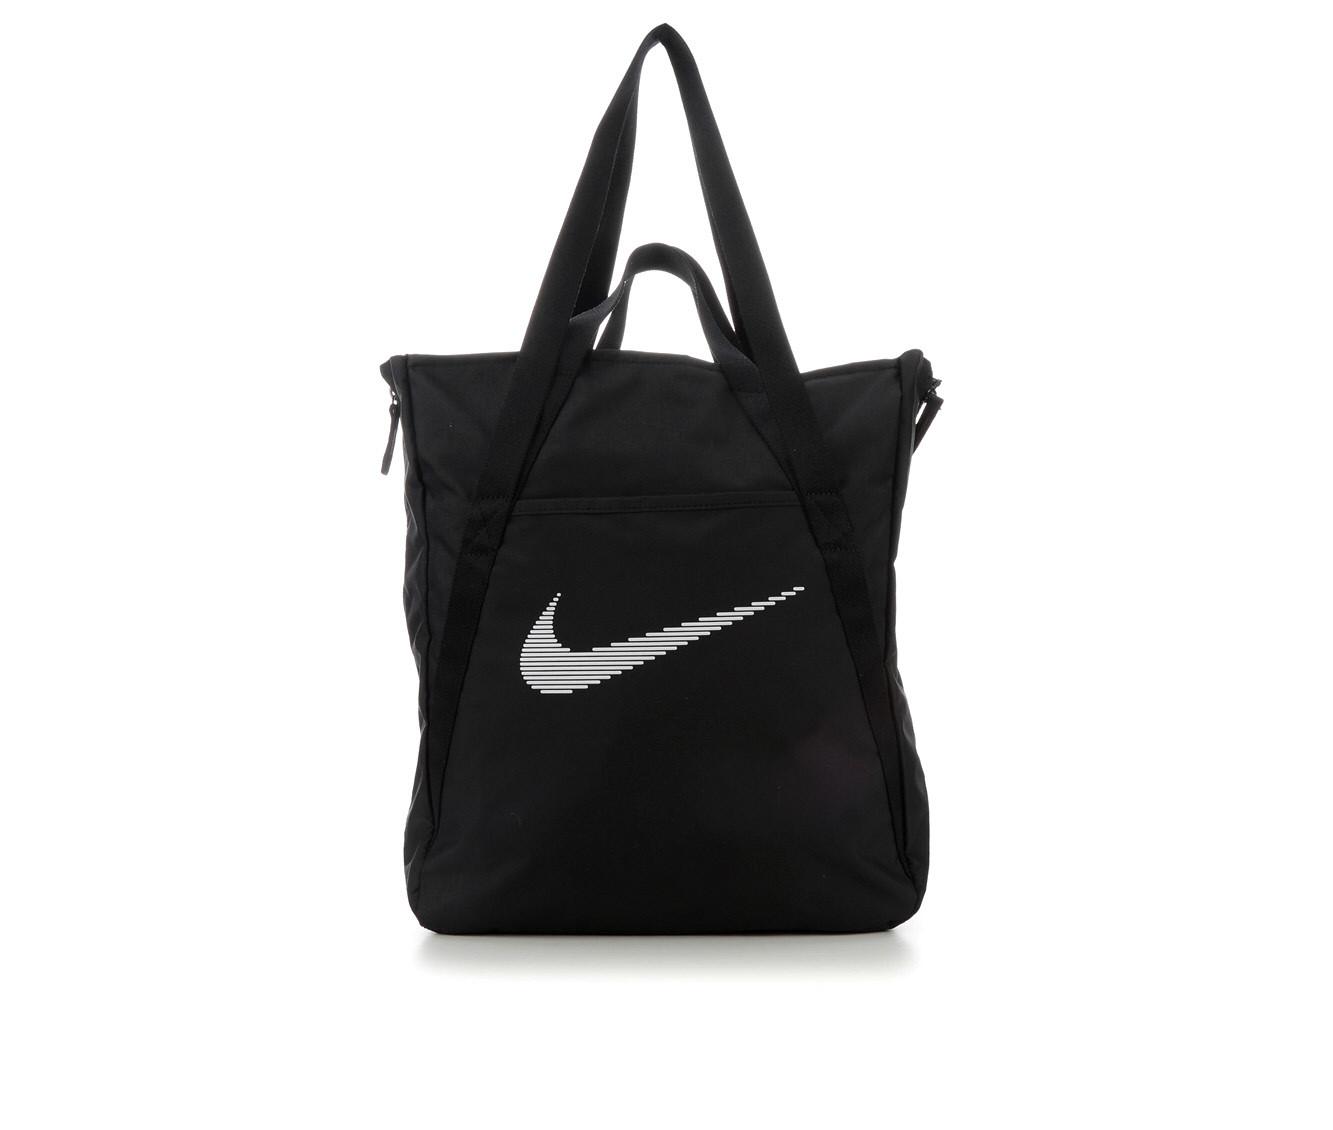 Nike Canvas Tote Bag / Gym Bag / Purse